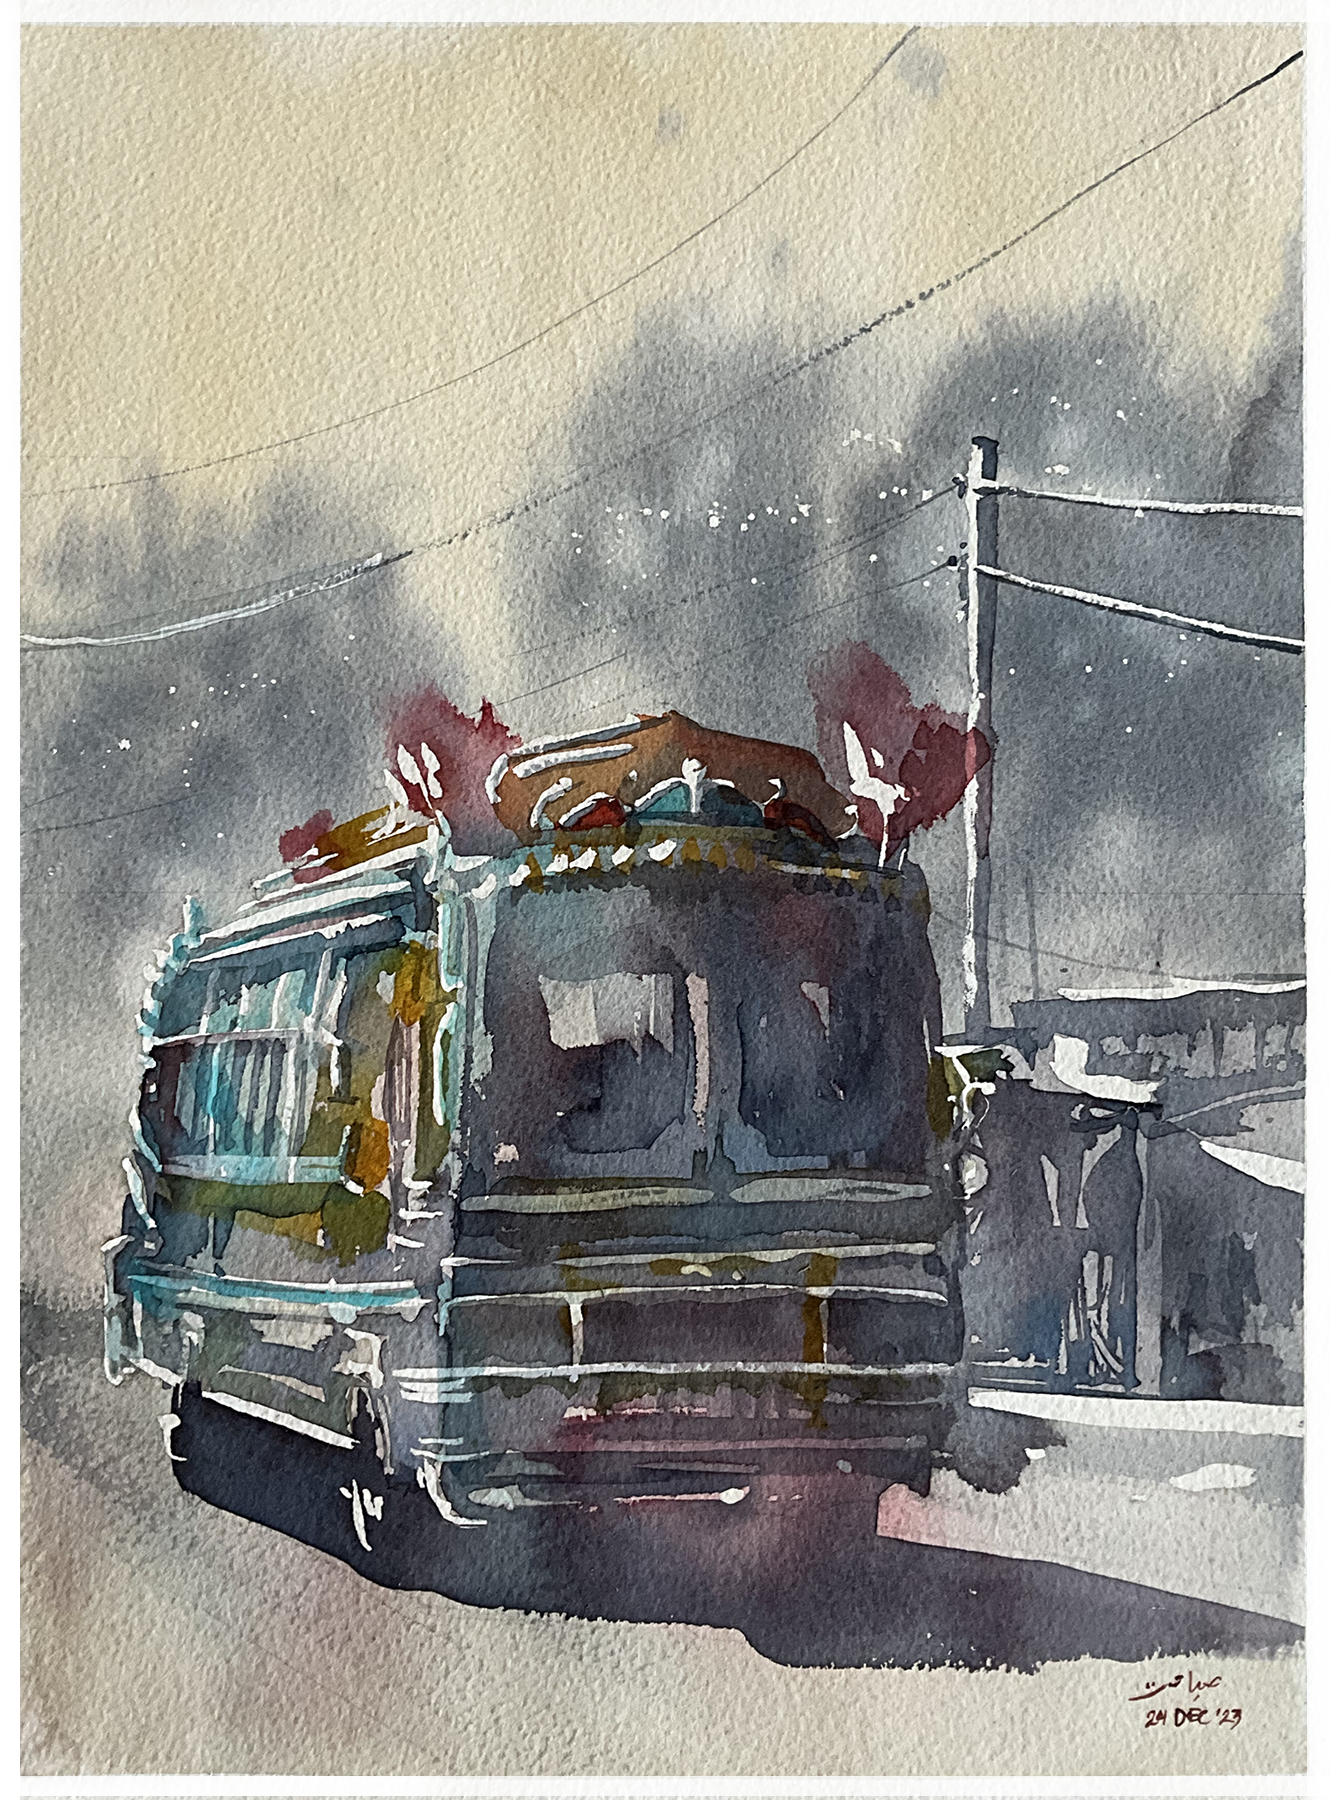 Karachi Bus